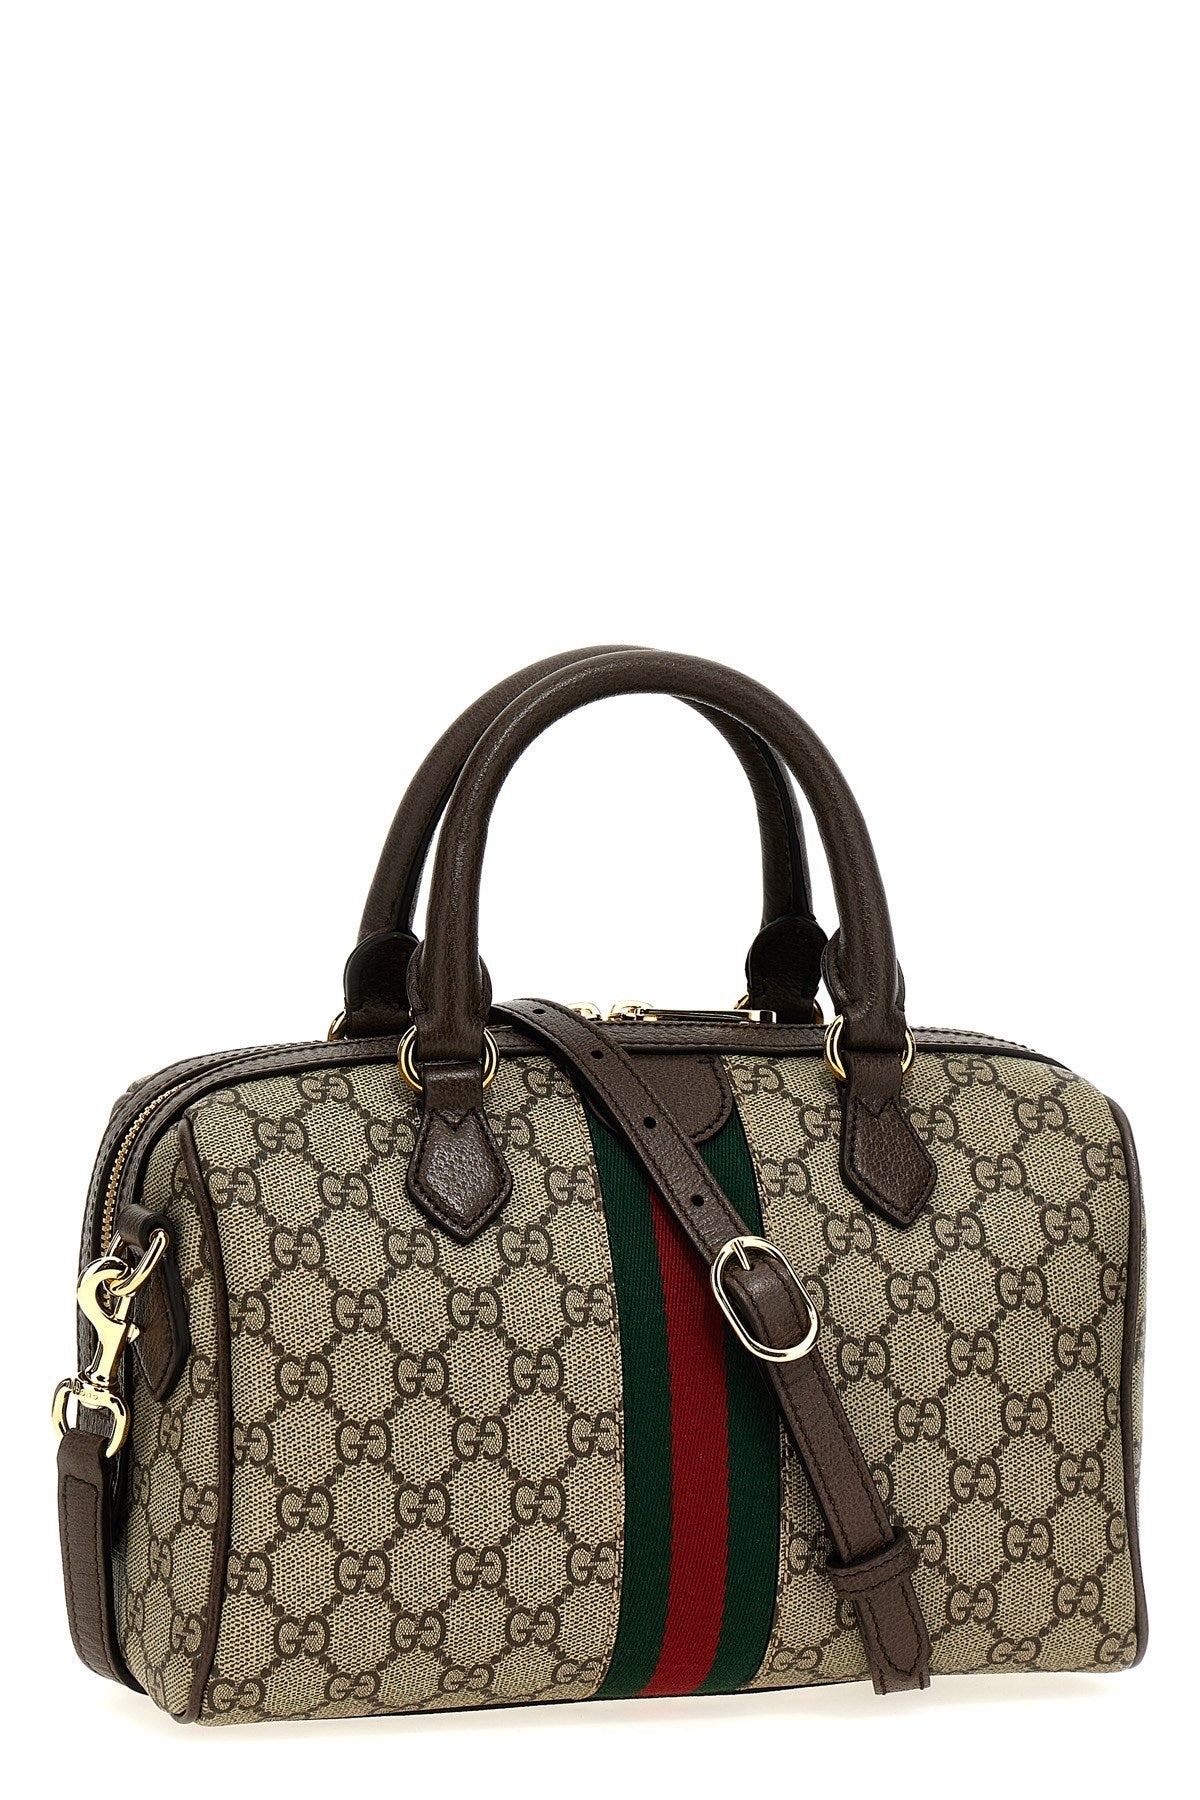 Gucci Women 'Ophidia Gg' Small Handbag - 2